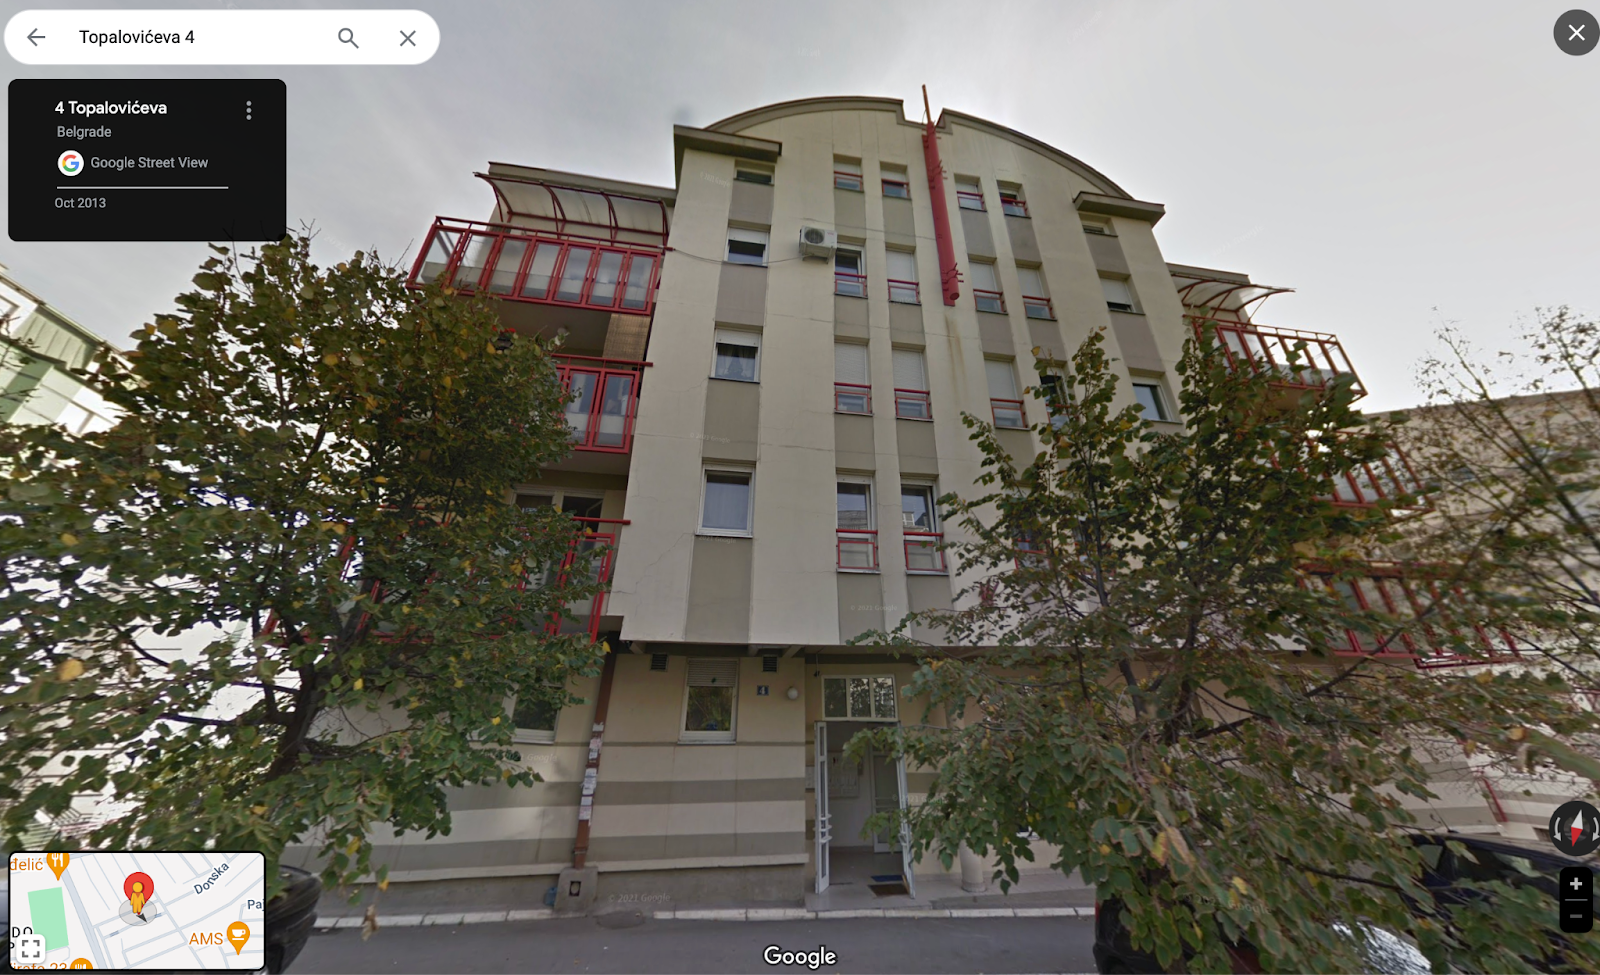 Topalovićeva 4 as seen on Google Street View, where Do and Spajić supposedly met.